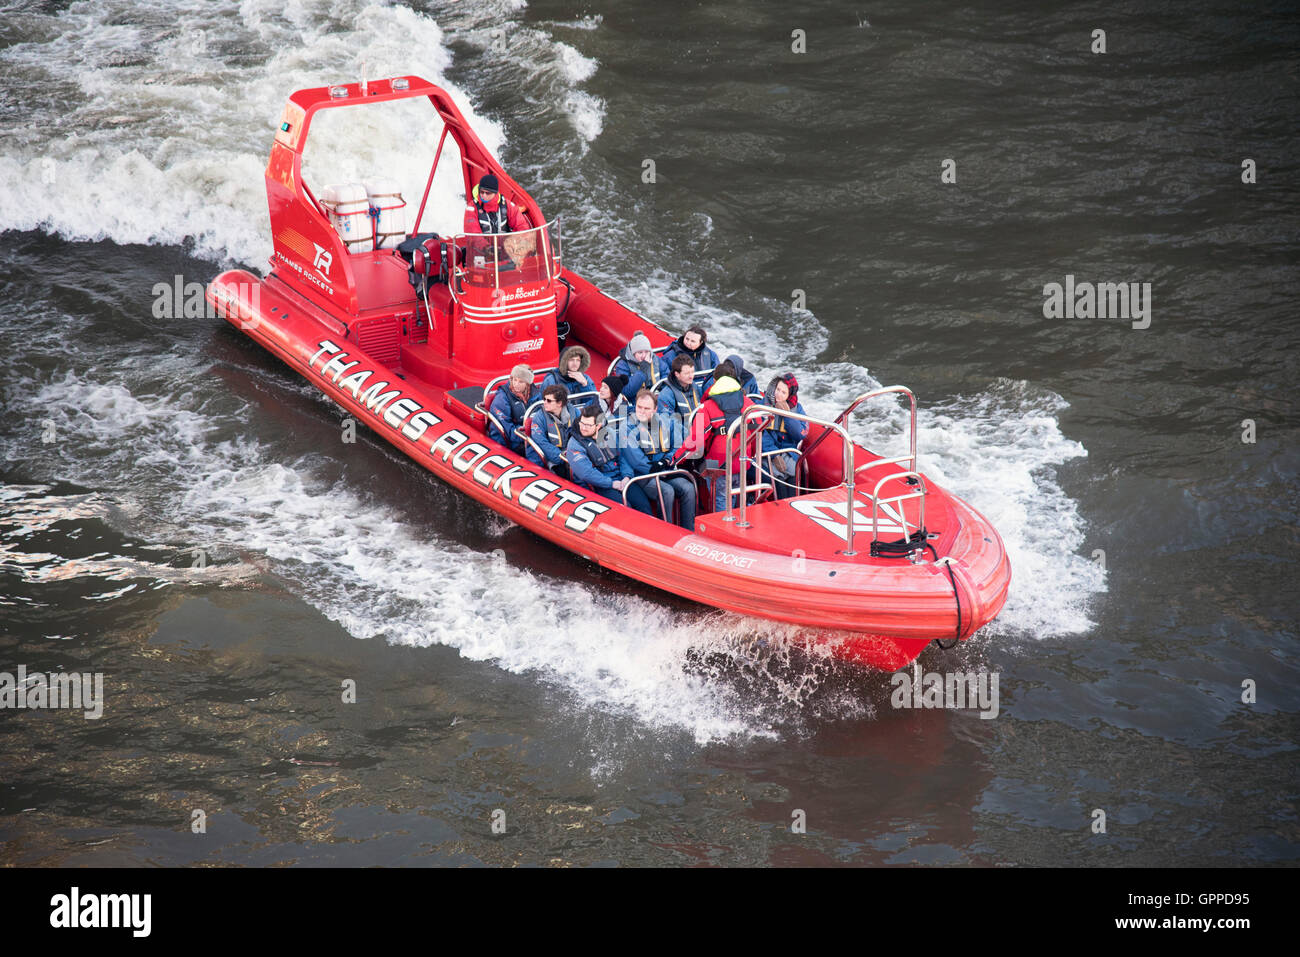 Thames Rockets rib boat ride river Stock Photo